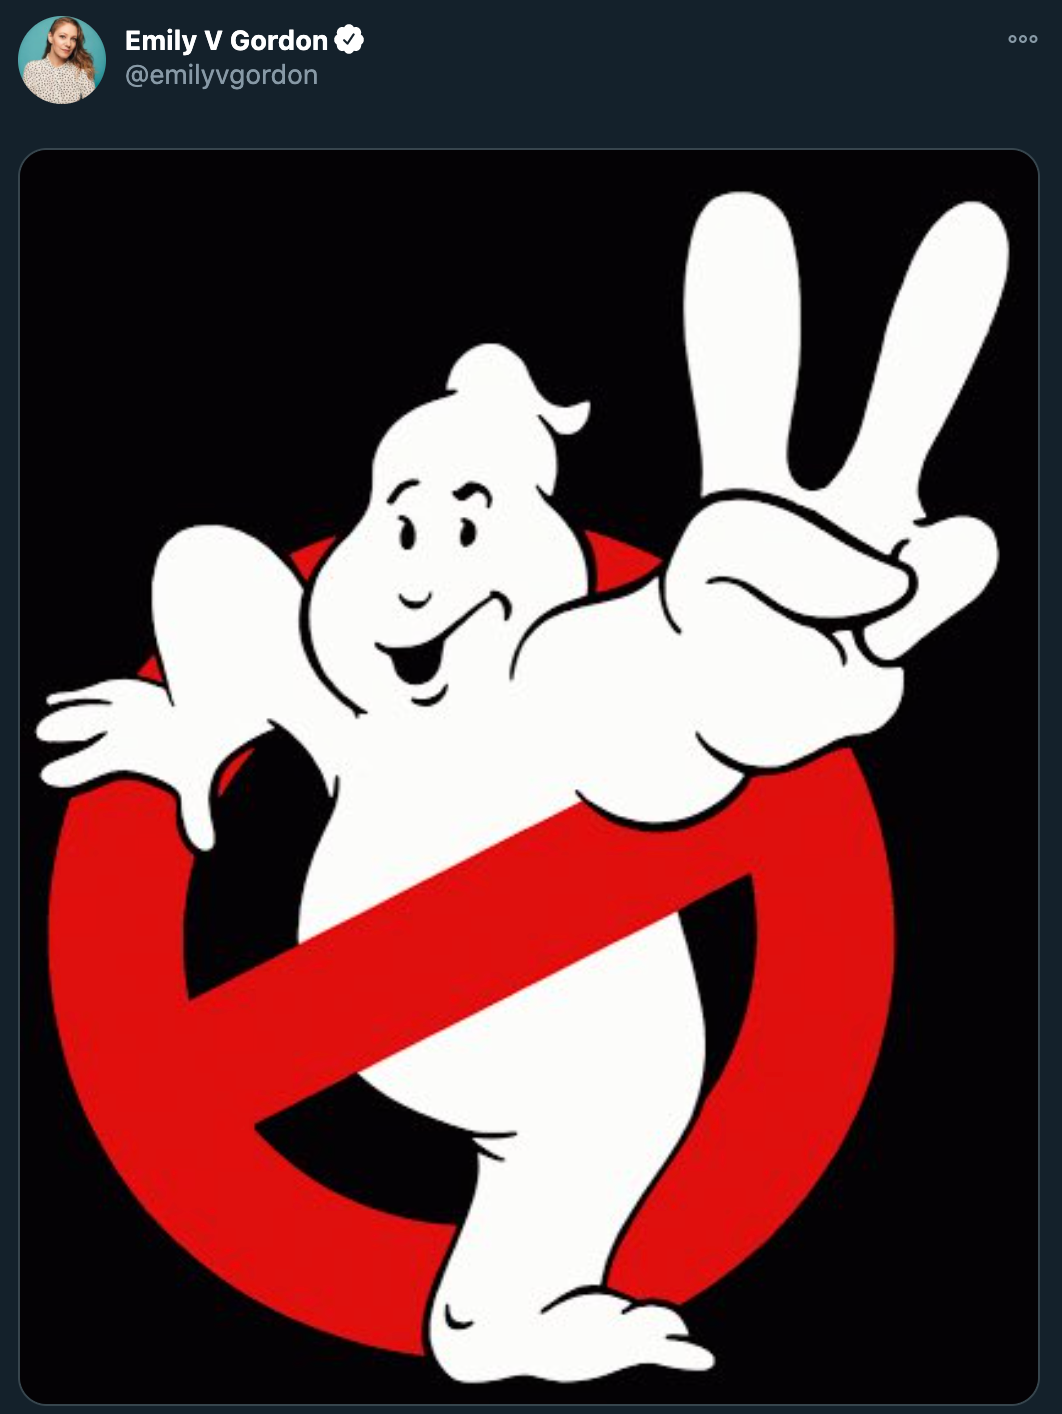 donald trump impeachment jokes - ghostbusters 2 logo